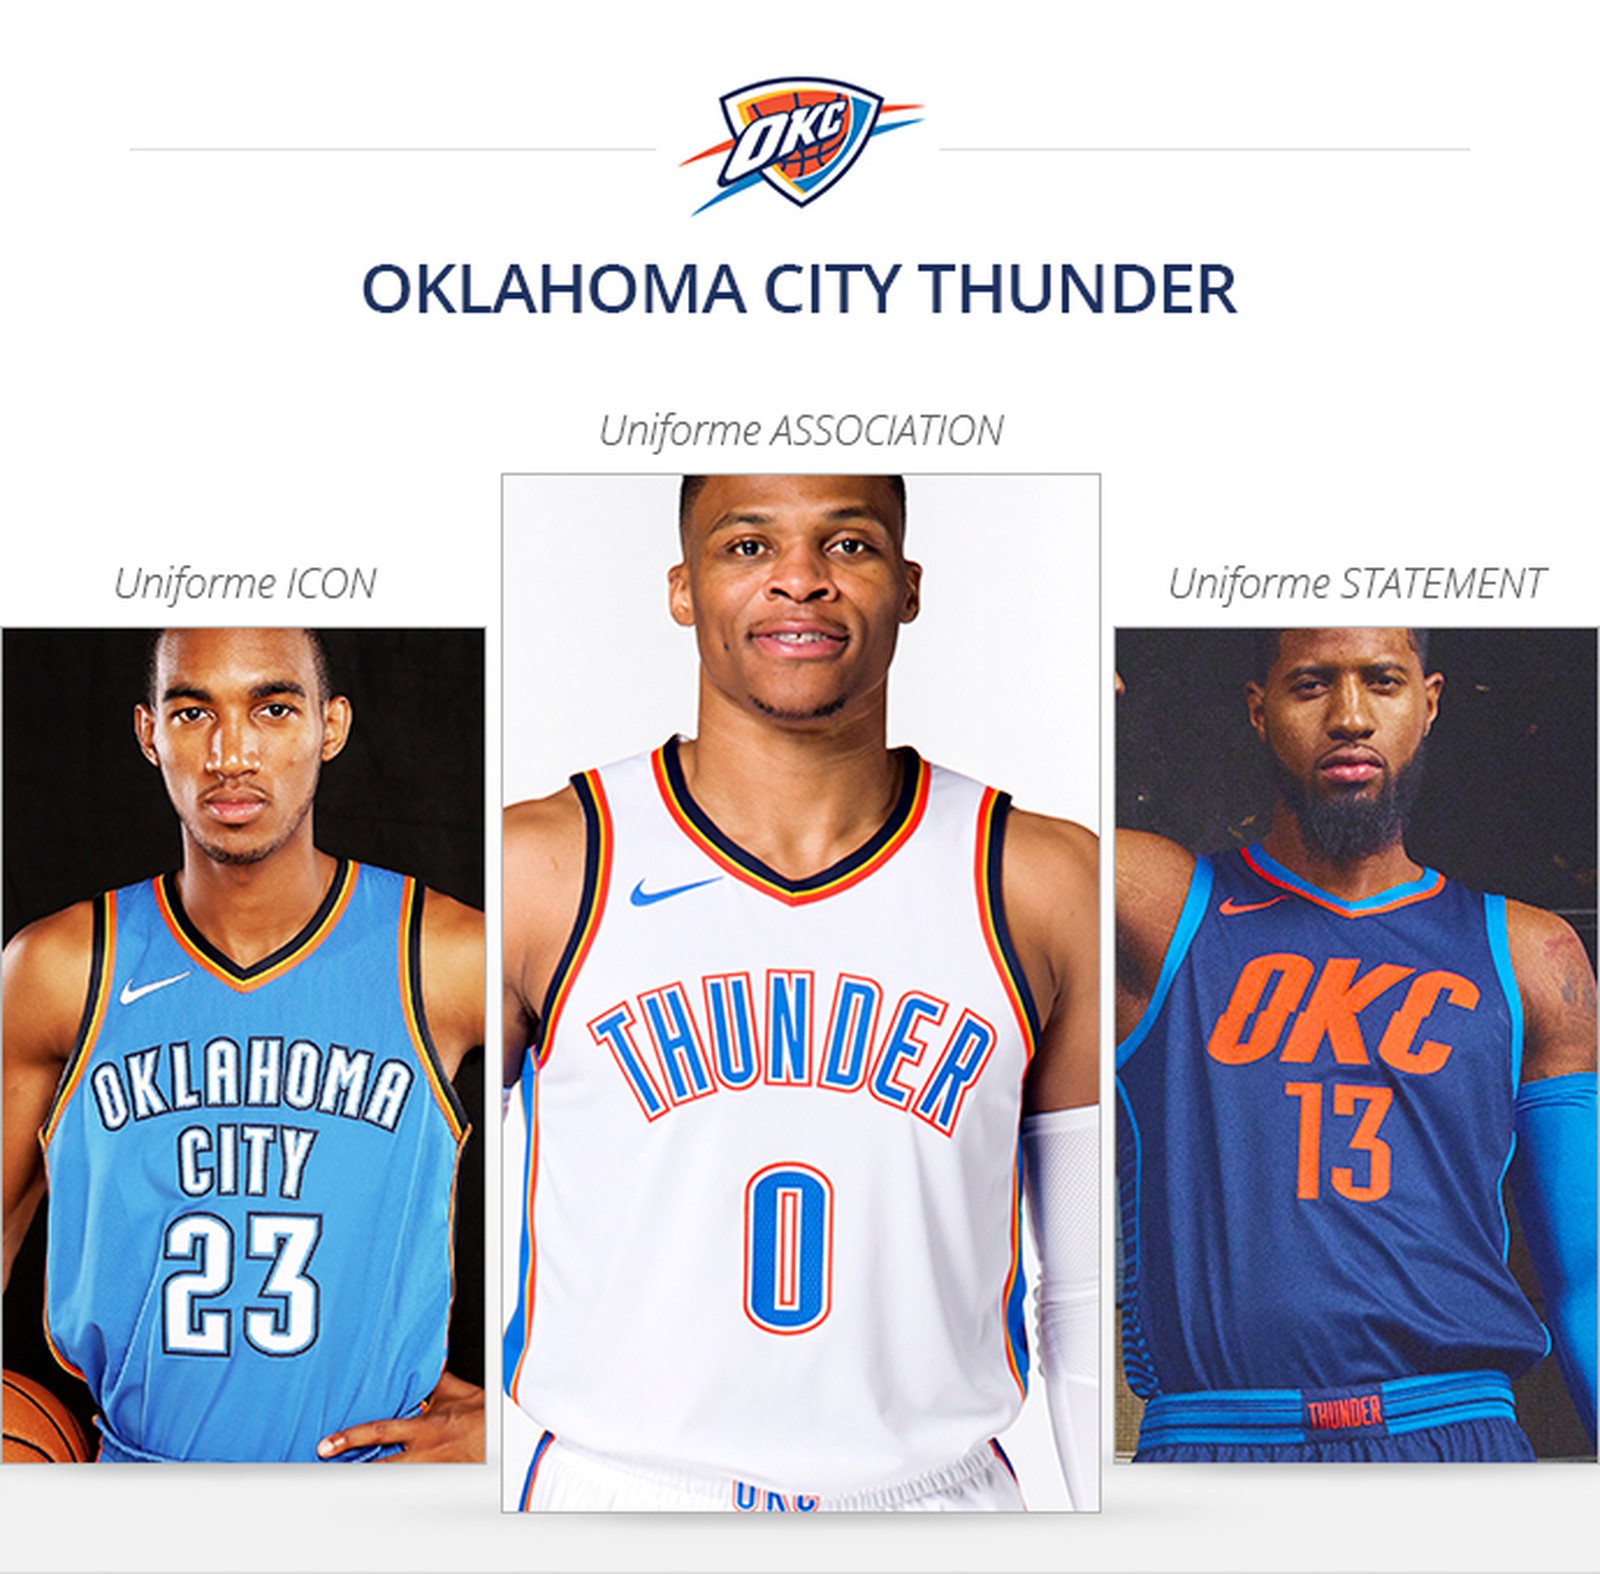 Uniformes Oklahoma City Thunder saison 2017/18